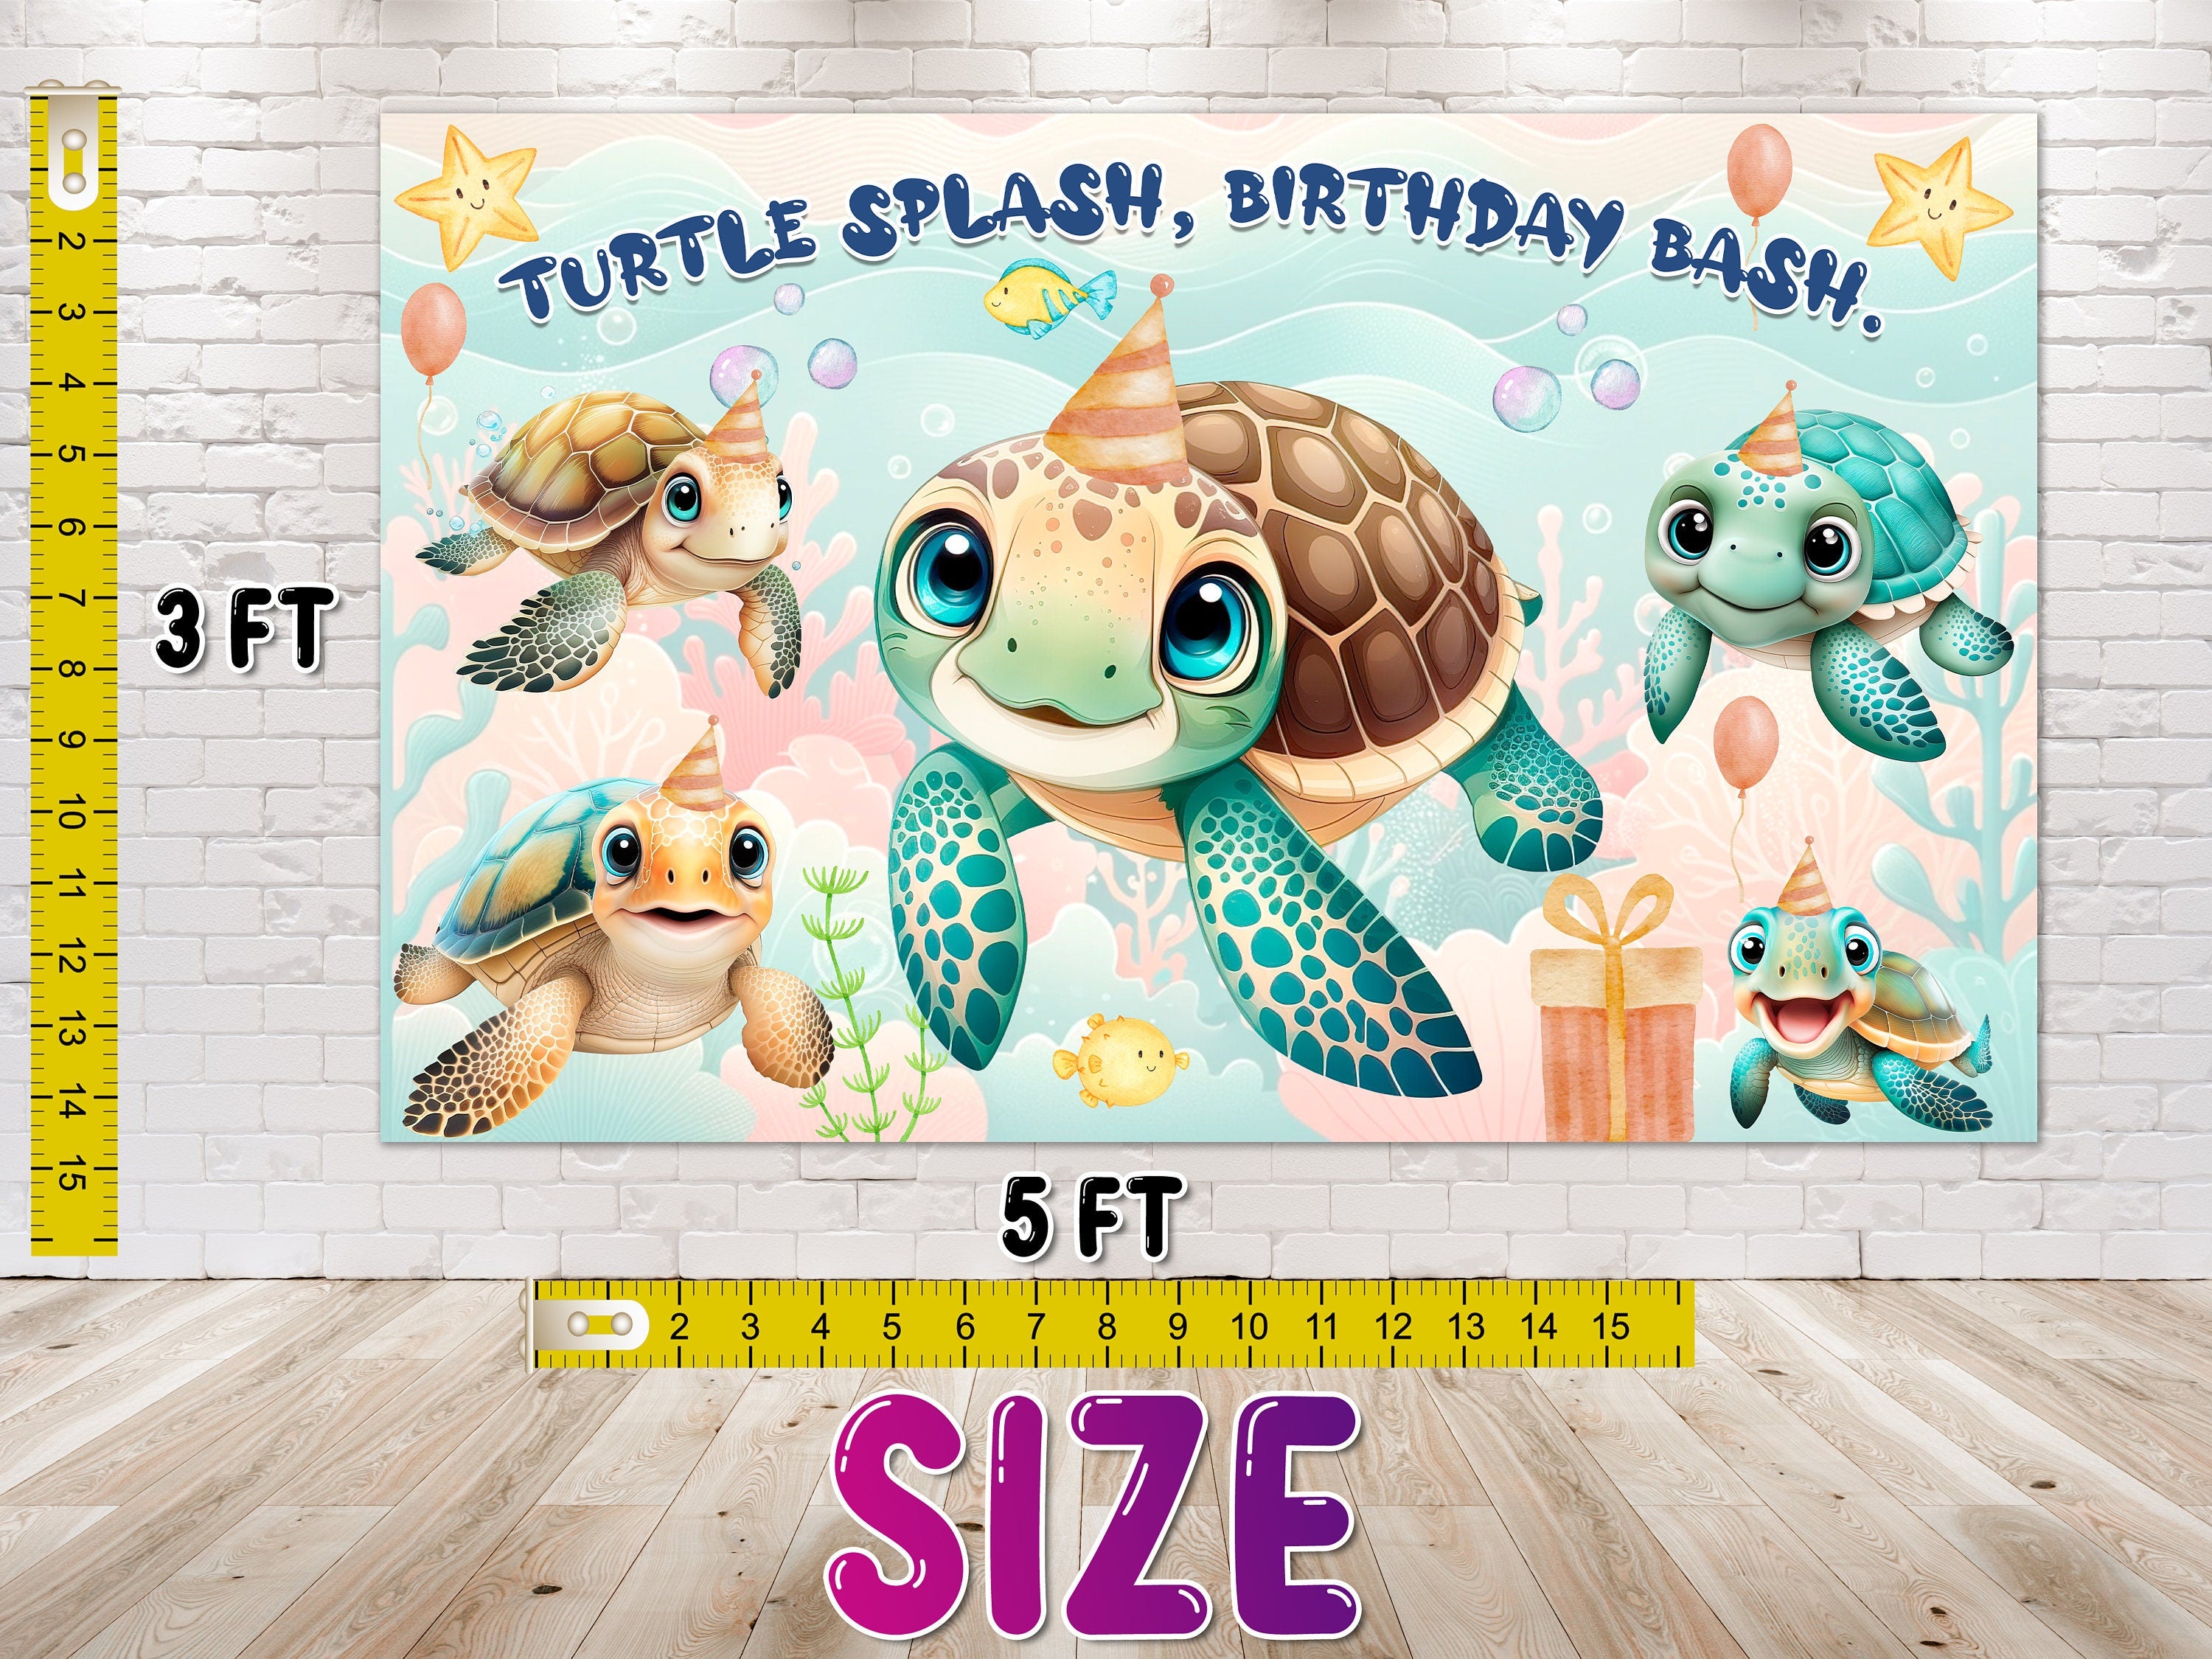 "Turtle Splash, Birthday Bash!" Backdrop 5x3 FT - Dive into the Fun!